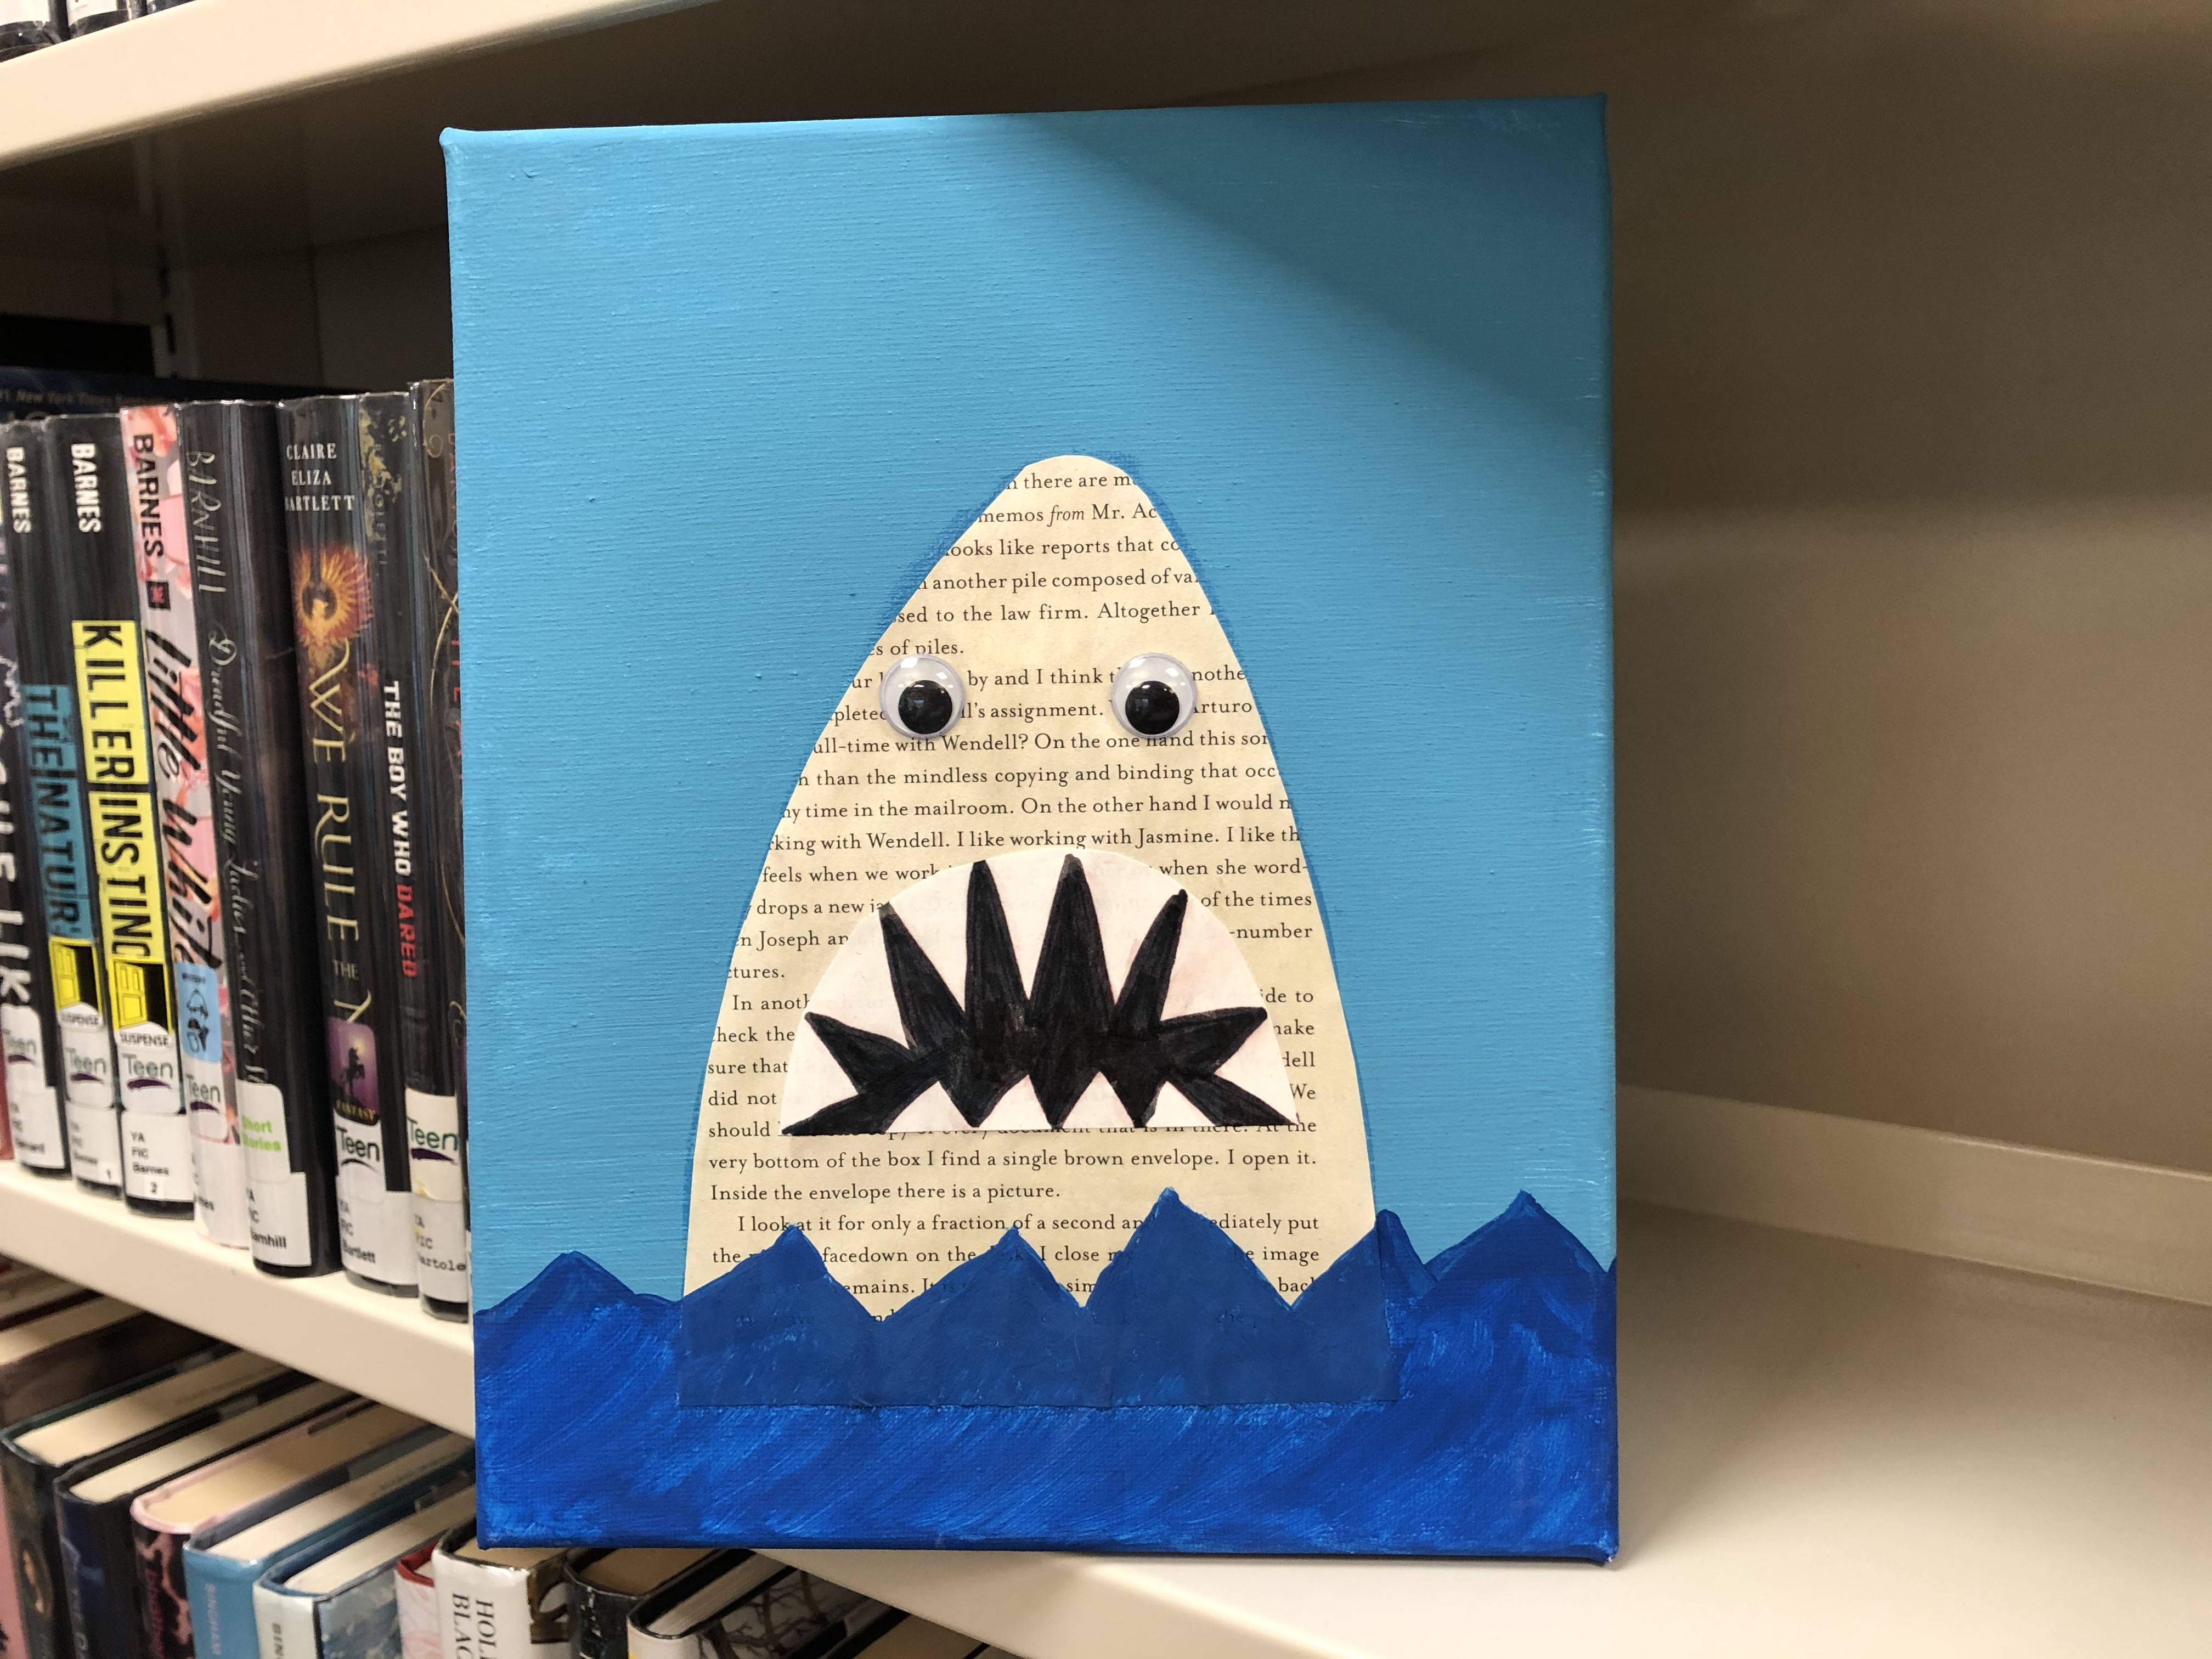 Shark painting